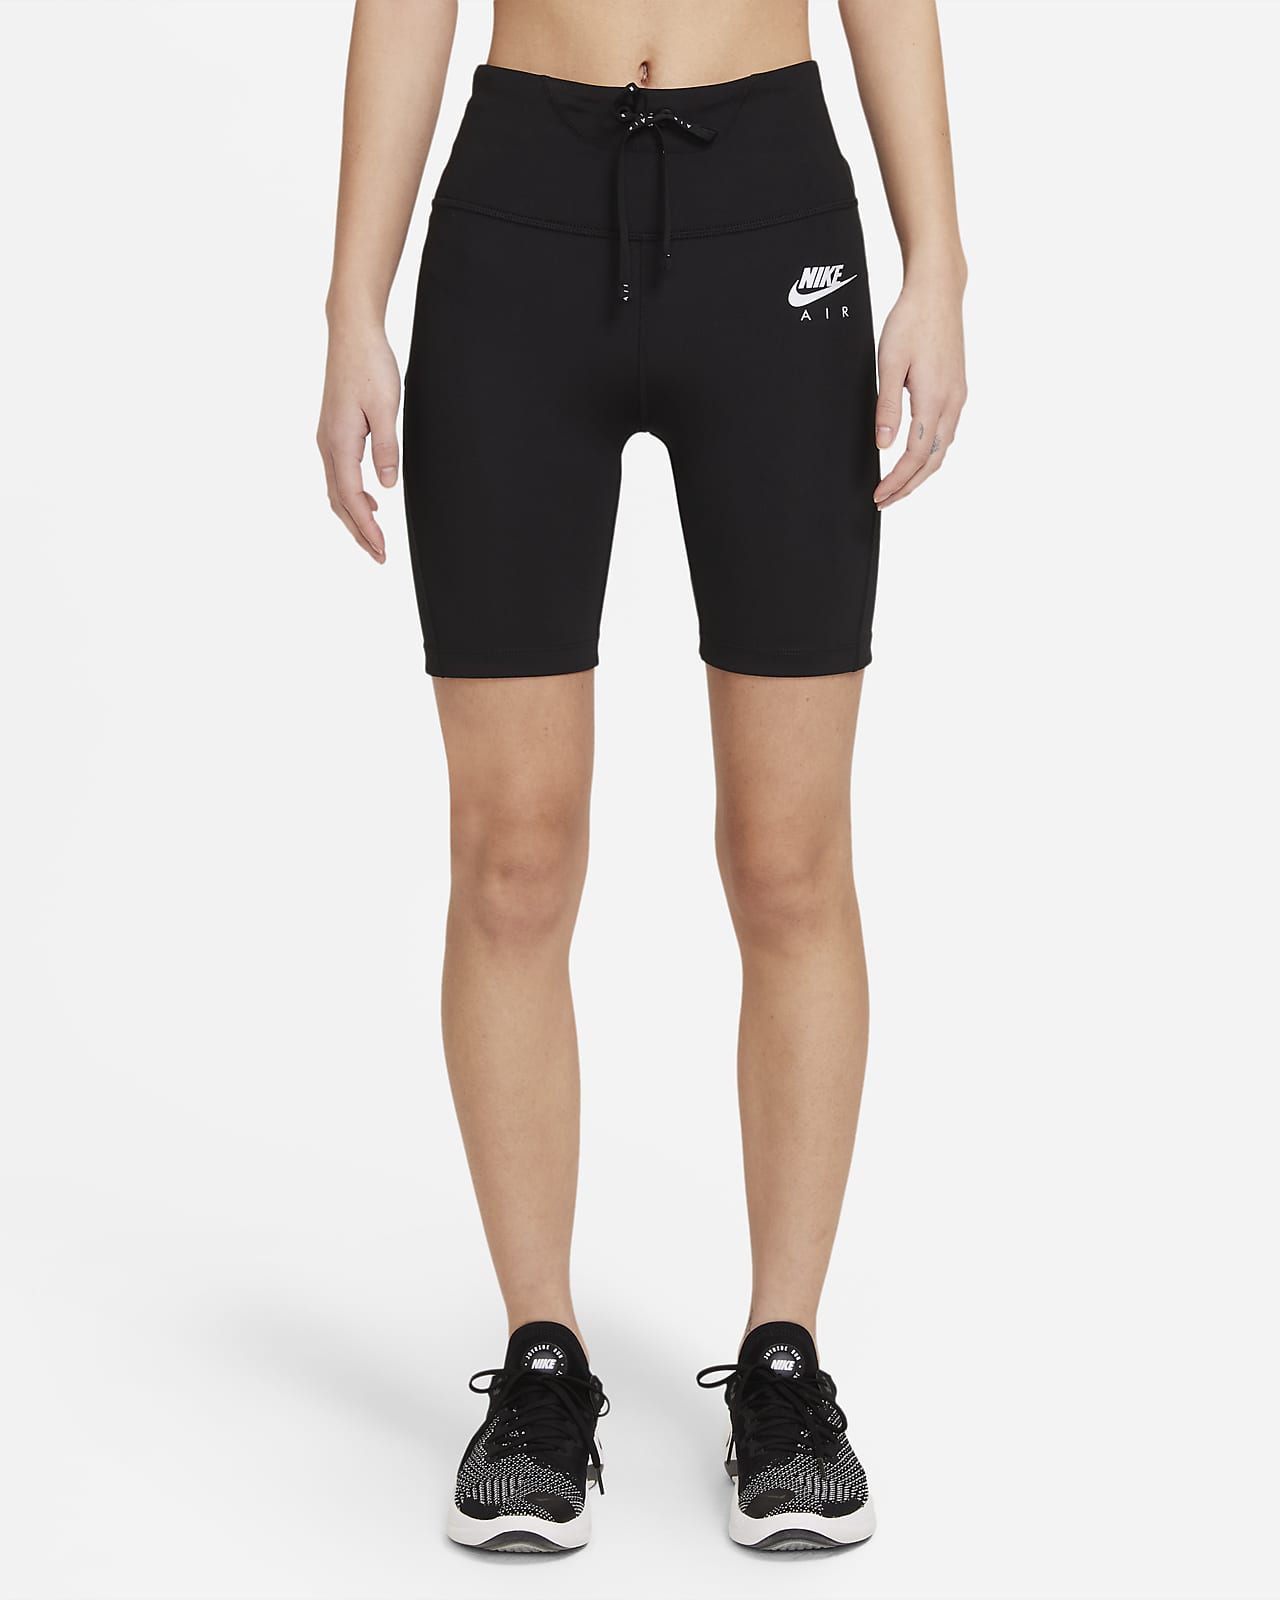 Nike Air Women's Running Shorts. Nike SG